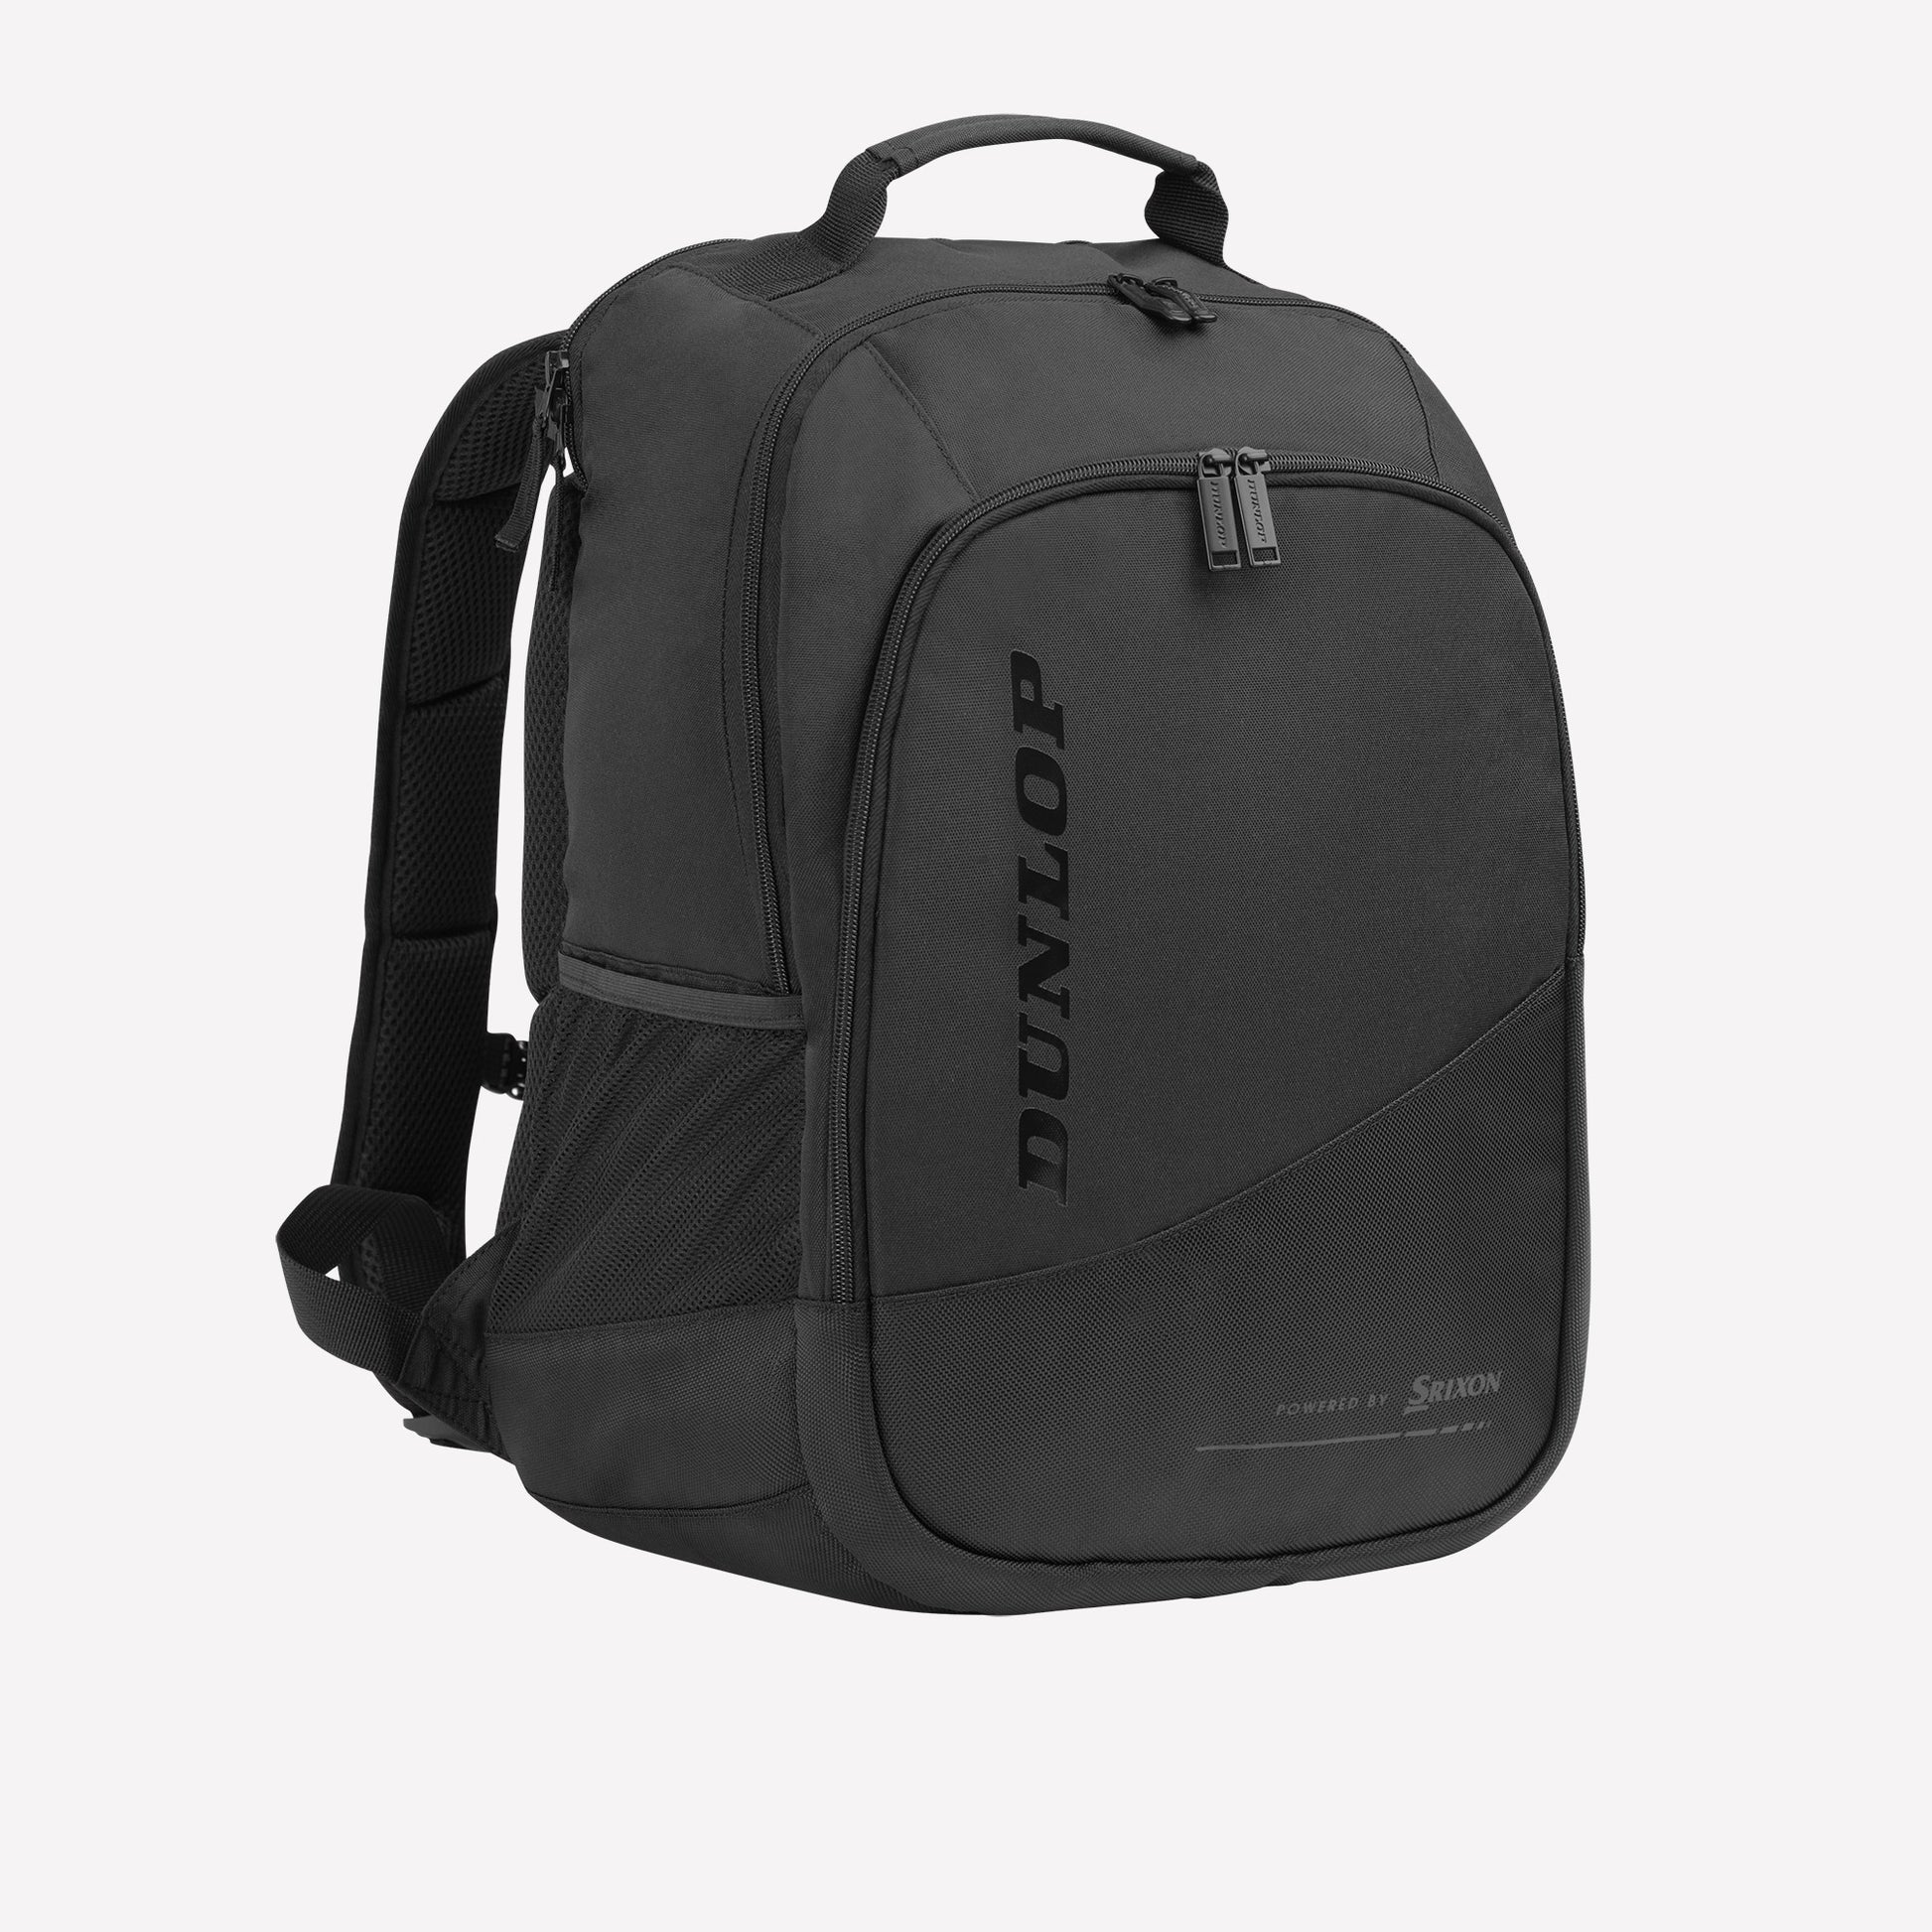 Dunlop CX Performance Tennis Backpack Black (1)